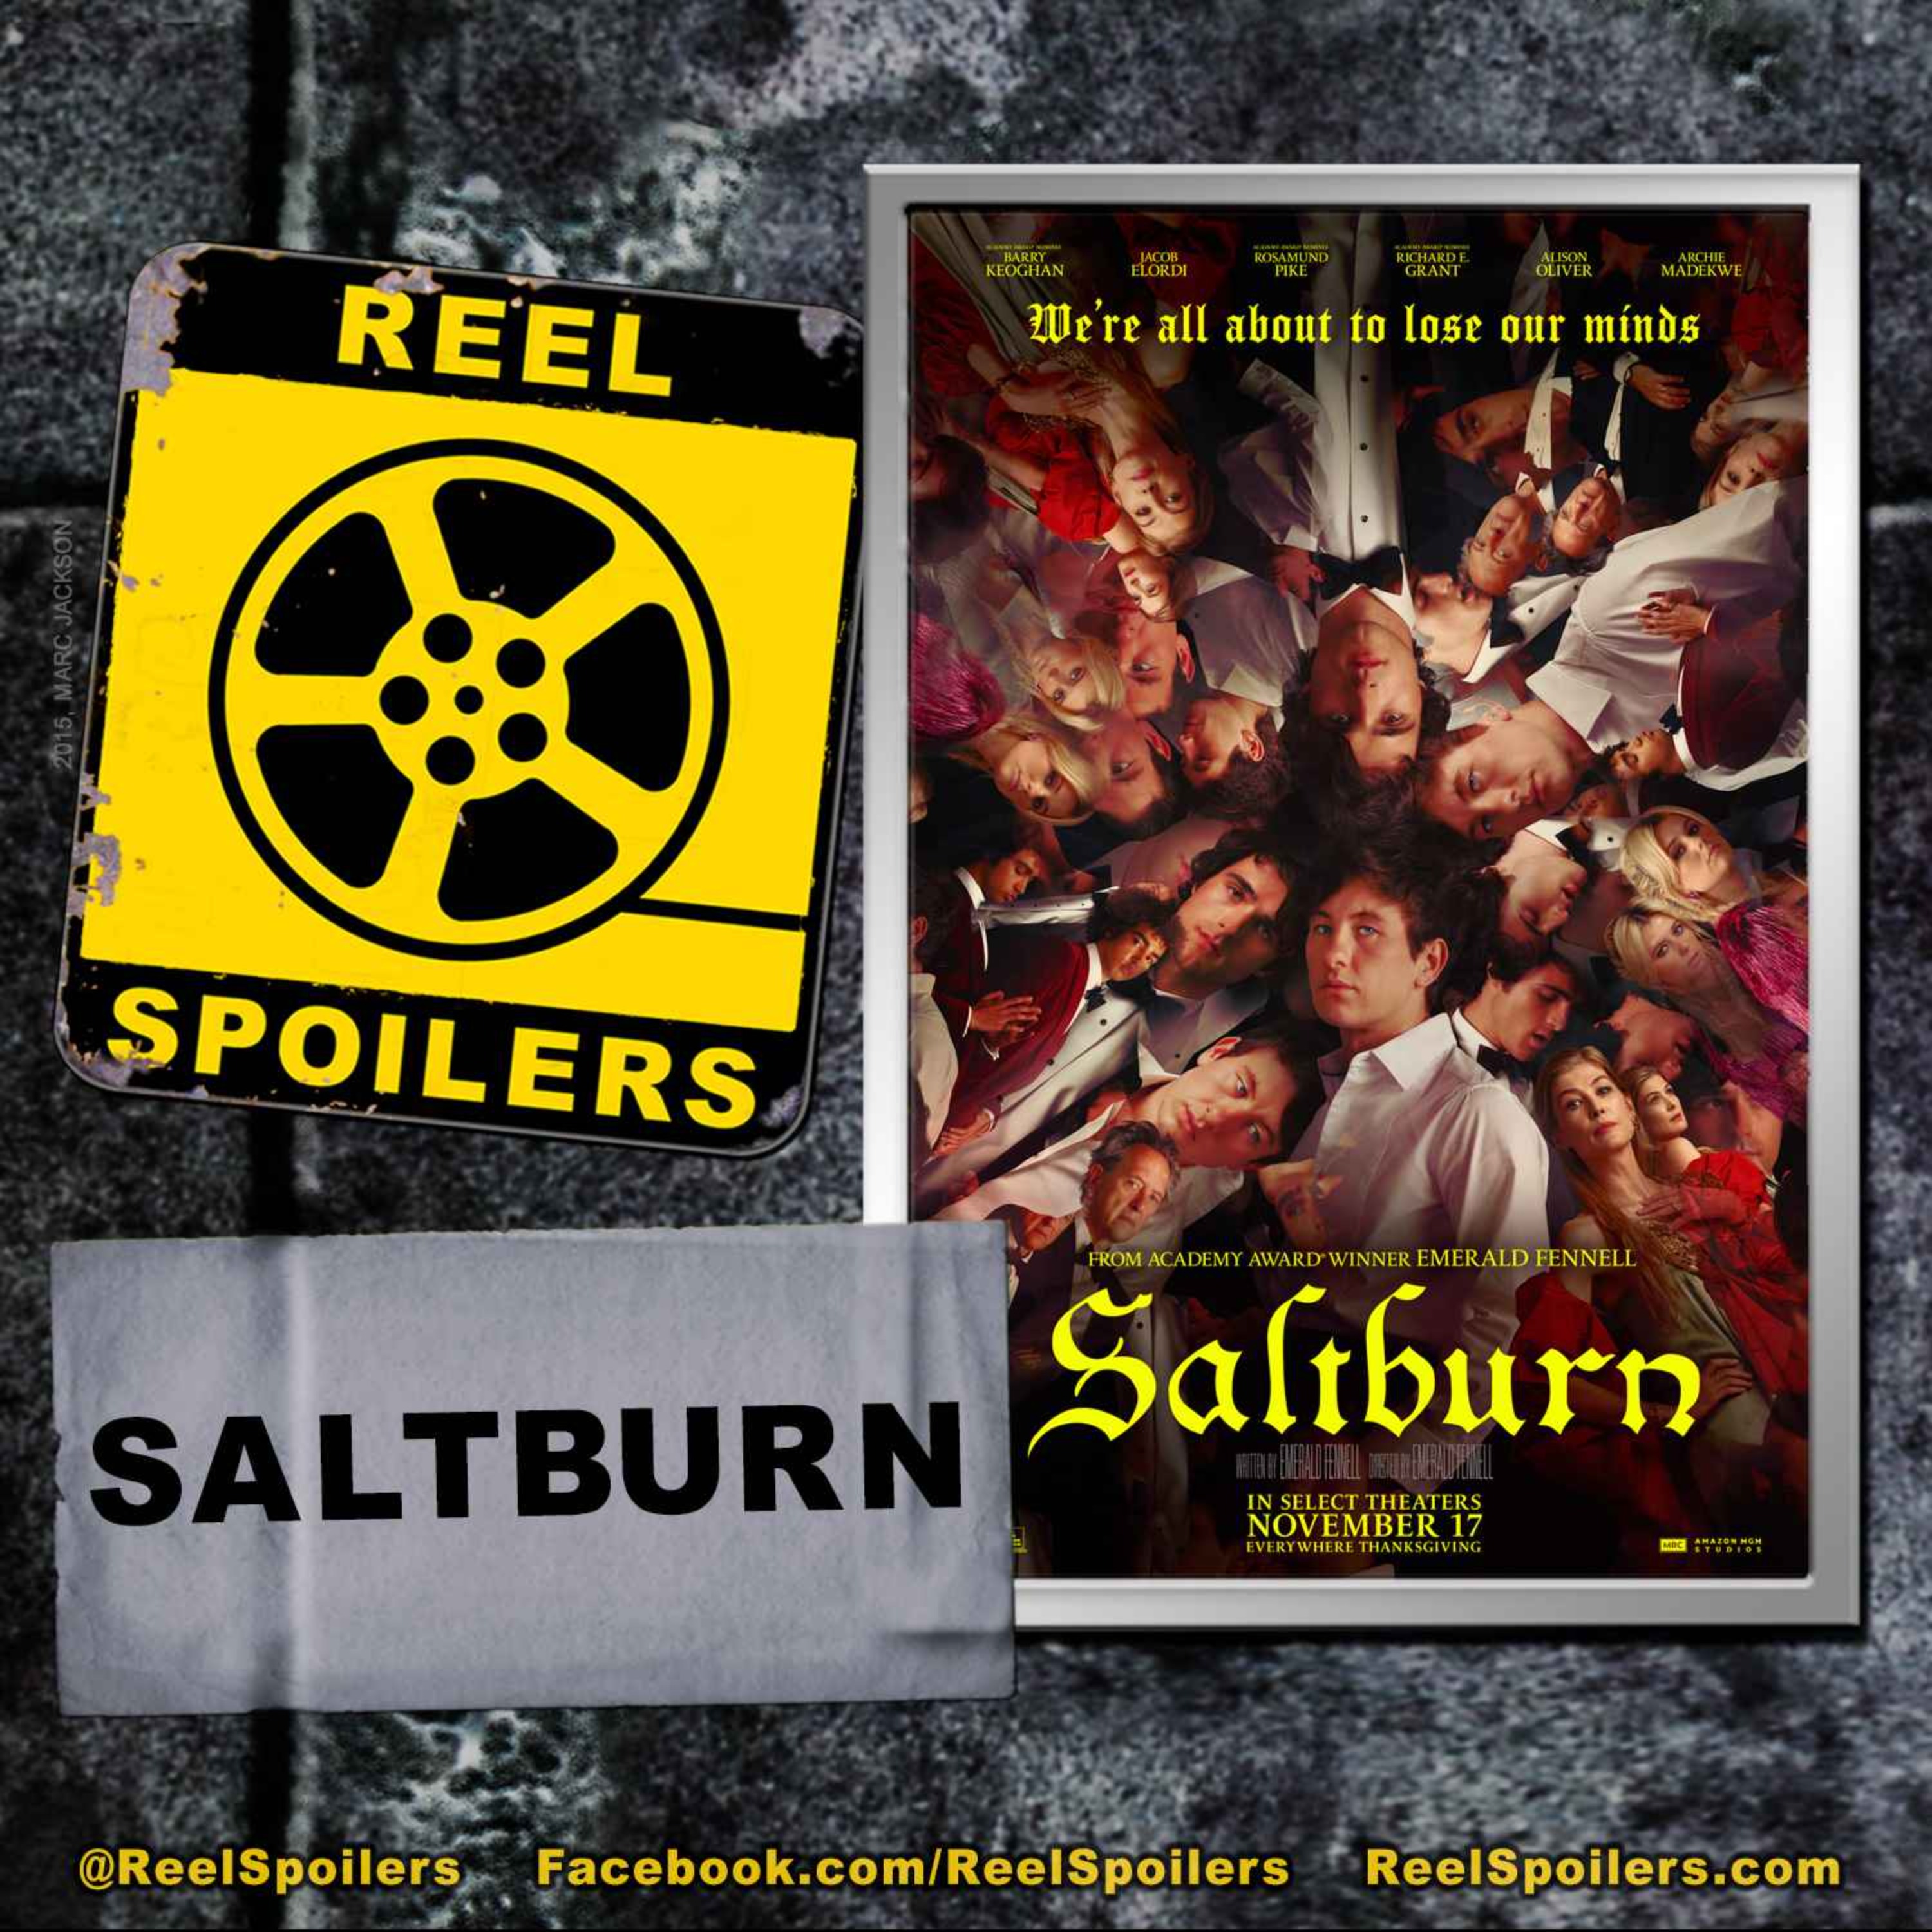 SALTBURN Starring starring Barry Keoghan, Jacob Elordi, Rosamund Pike, Richard E. Grant